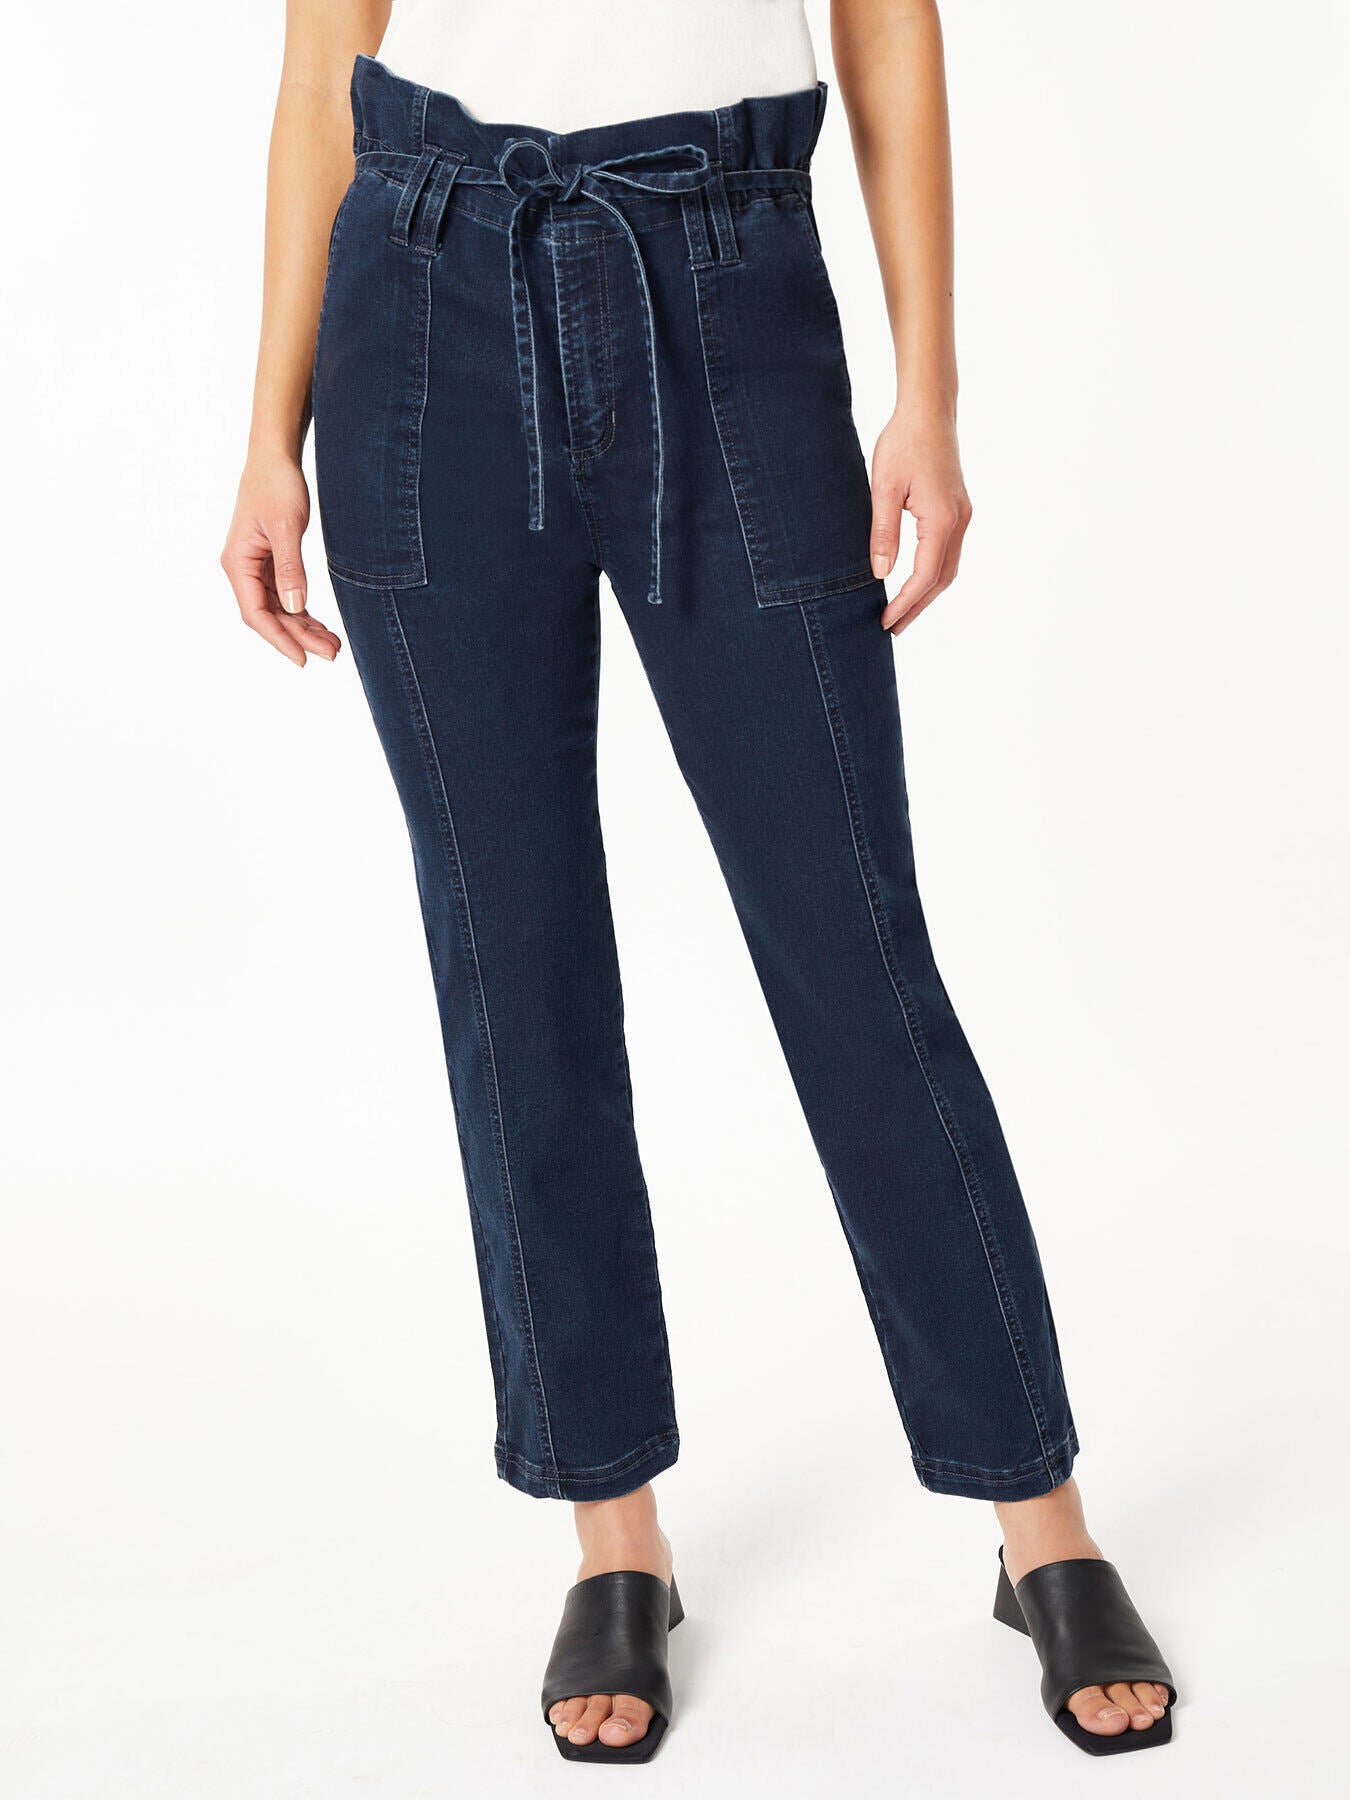 jone jeans Ladies High Waist skinny pants 3526